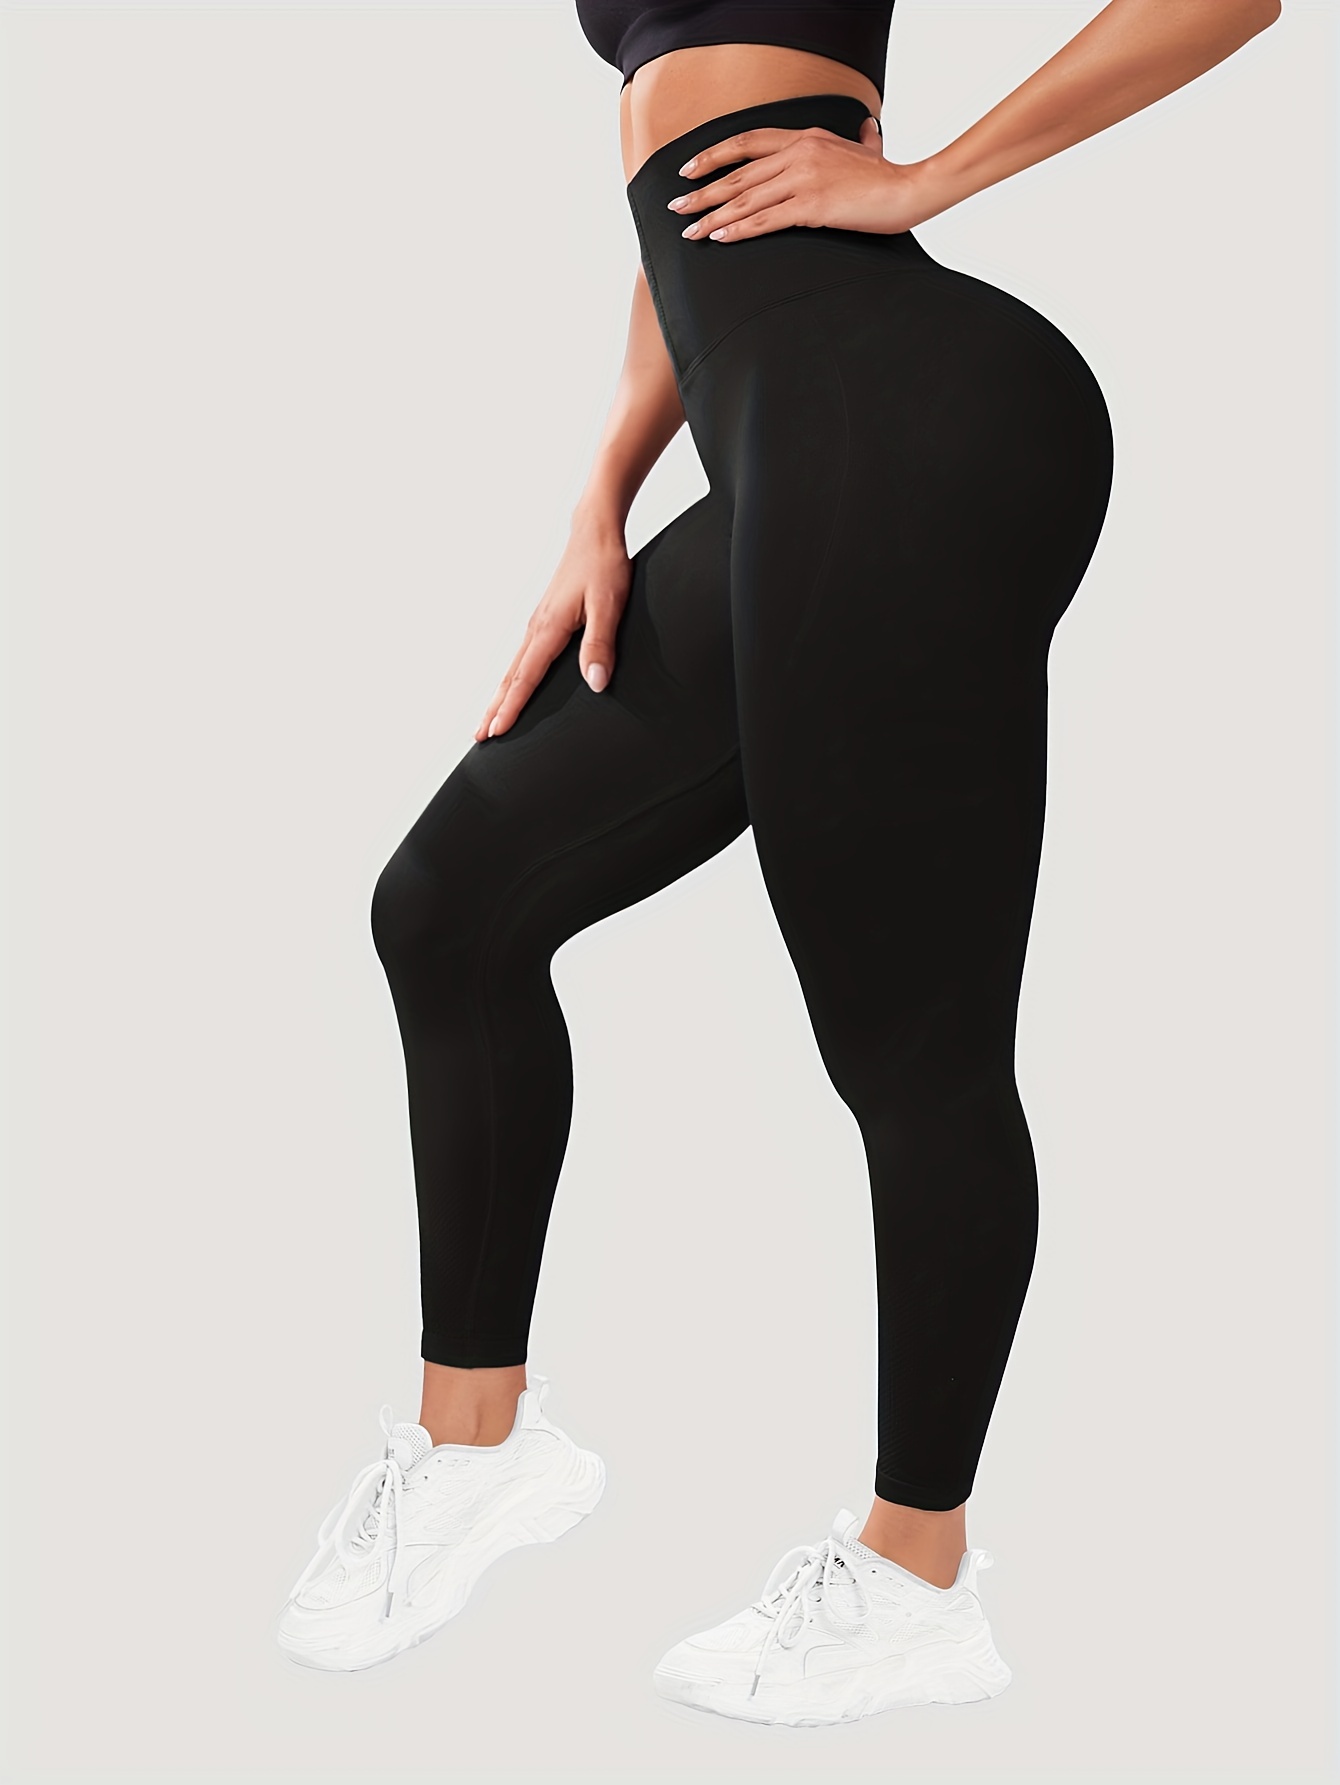 Leggings y Mallas Fitness Gym Mujer Online